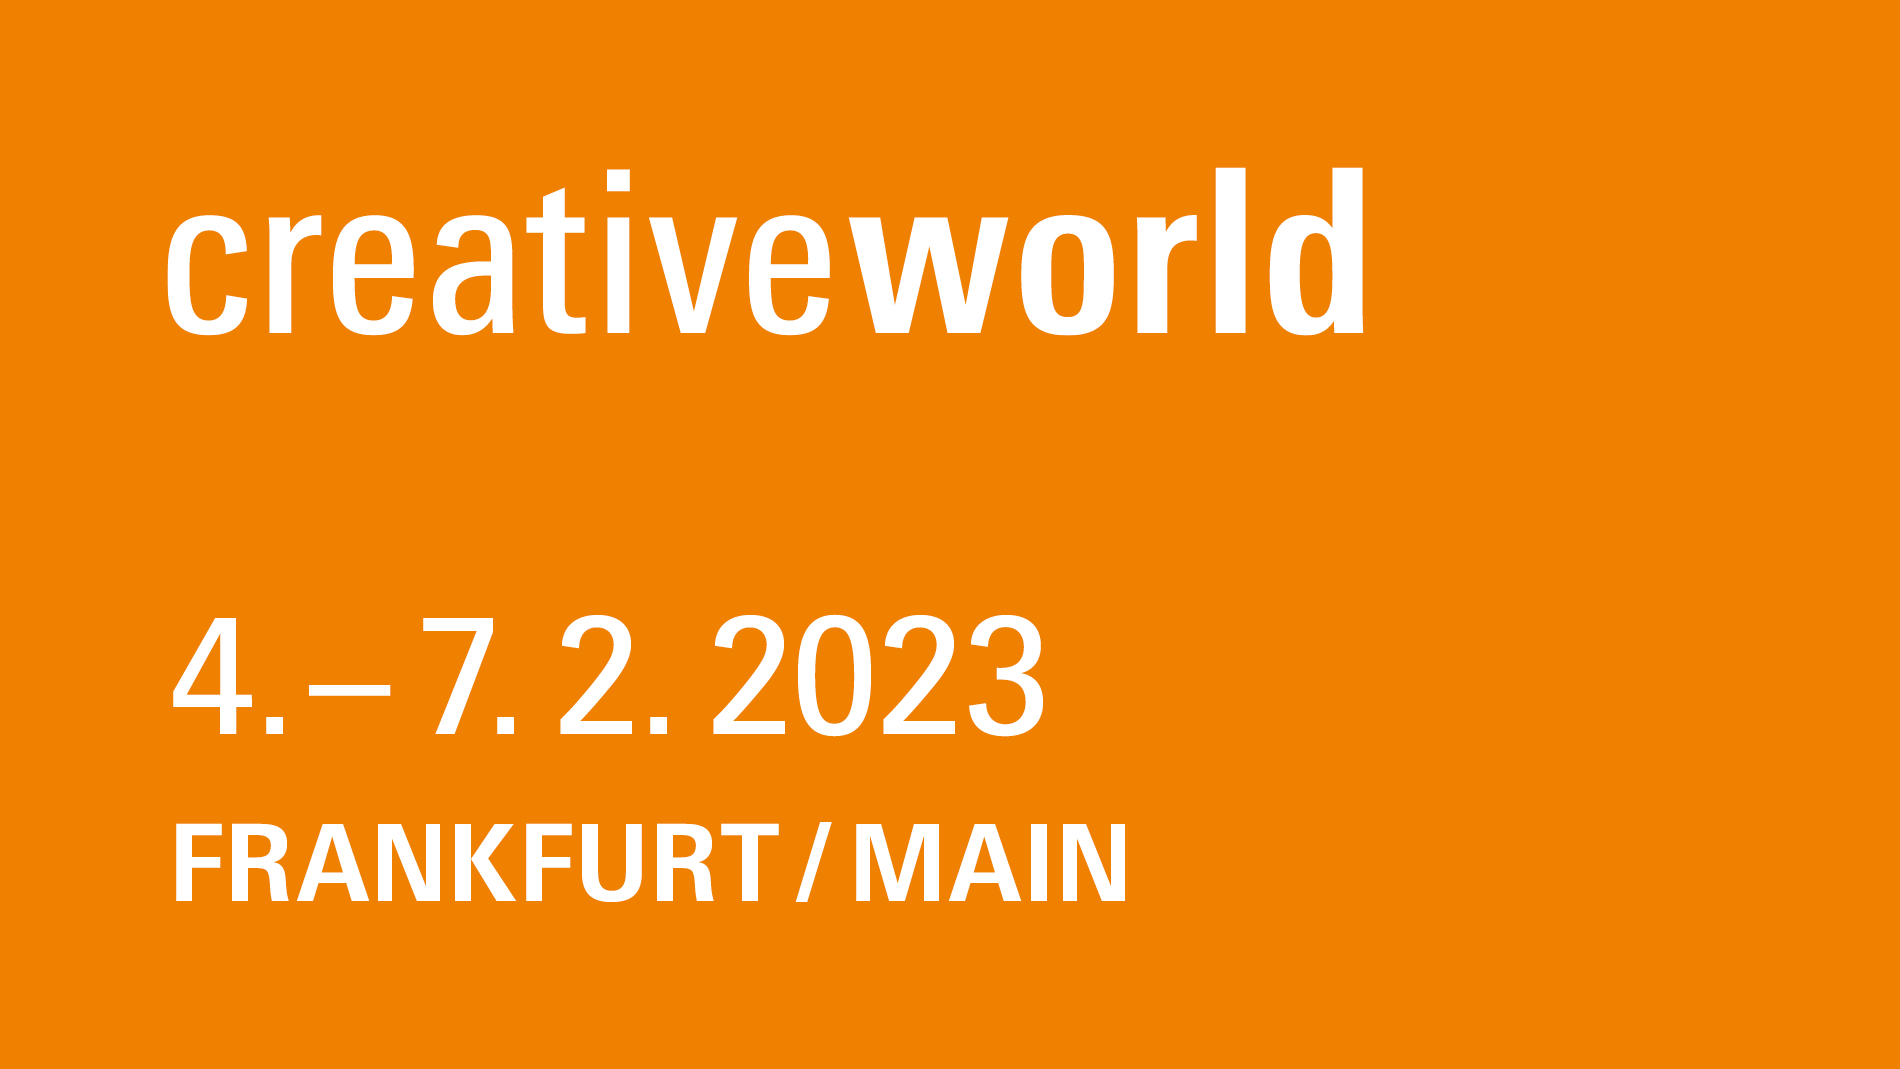 Creativeworld Date